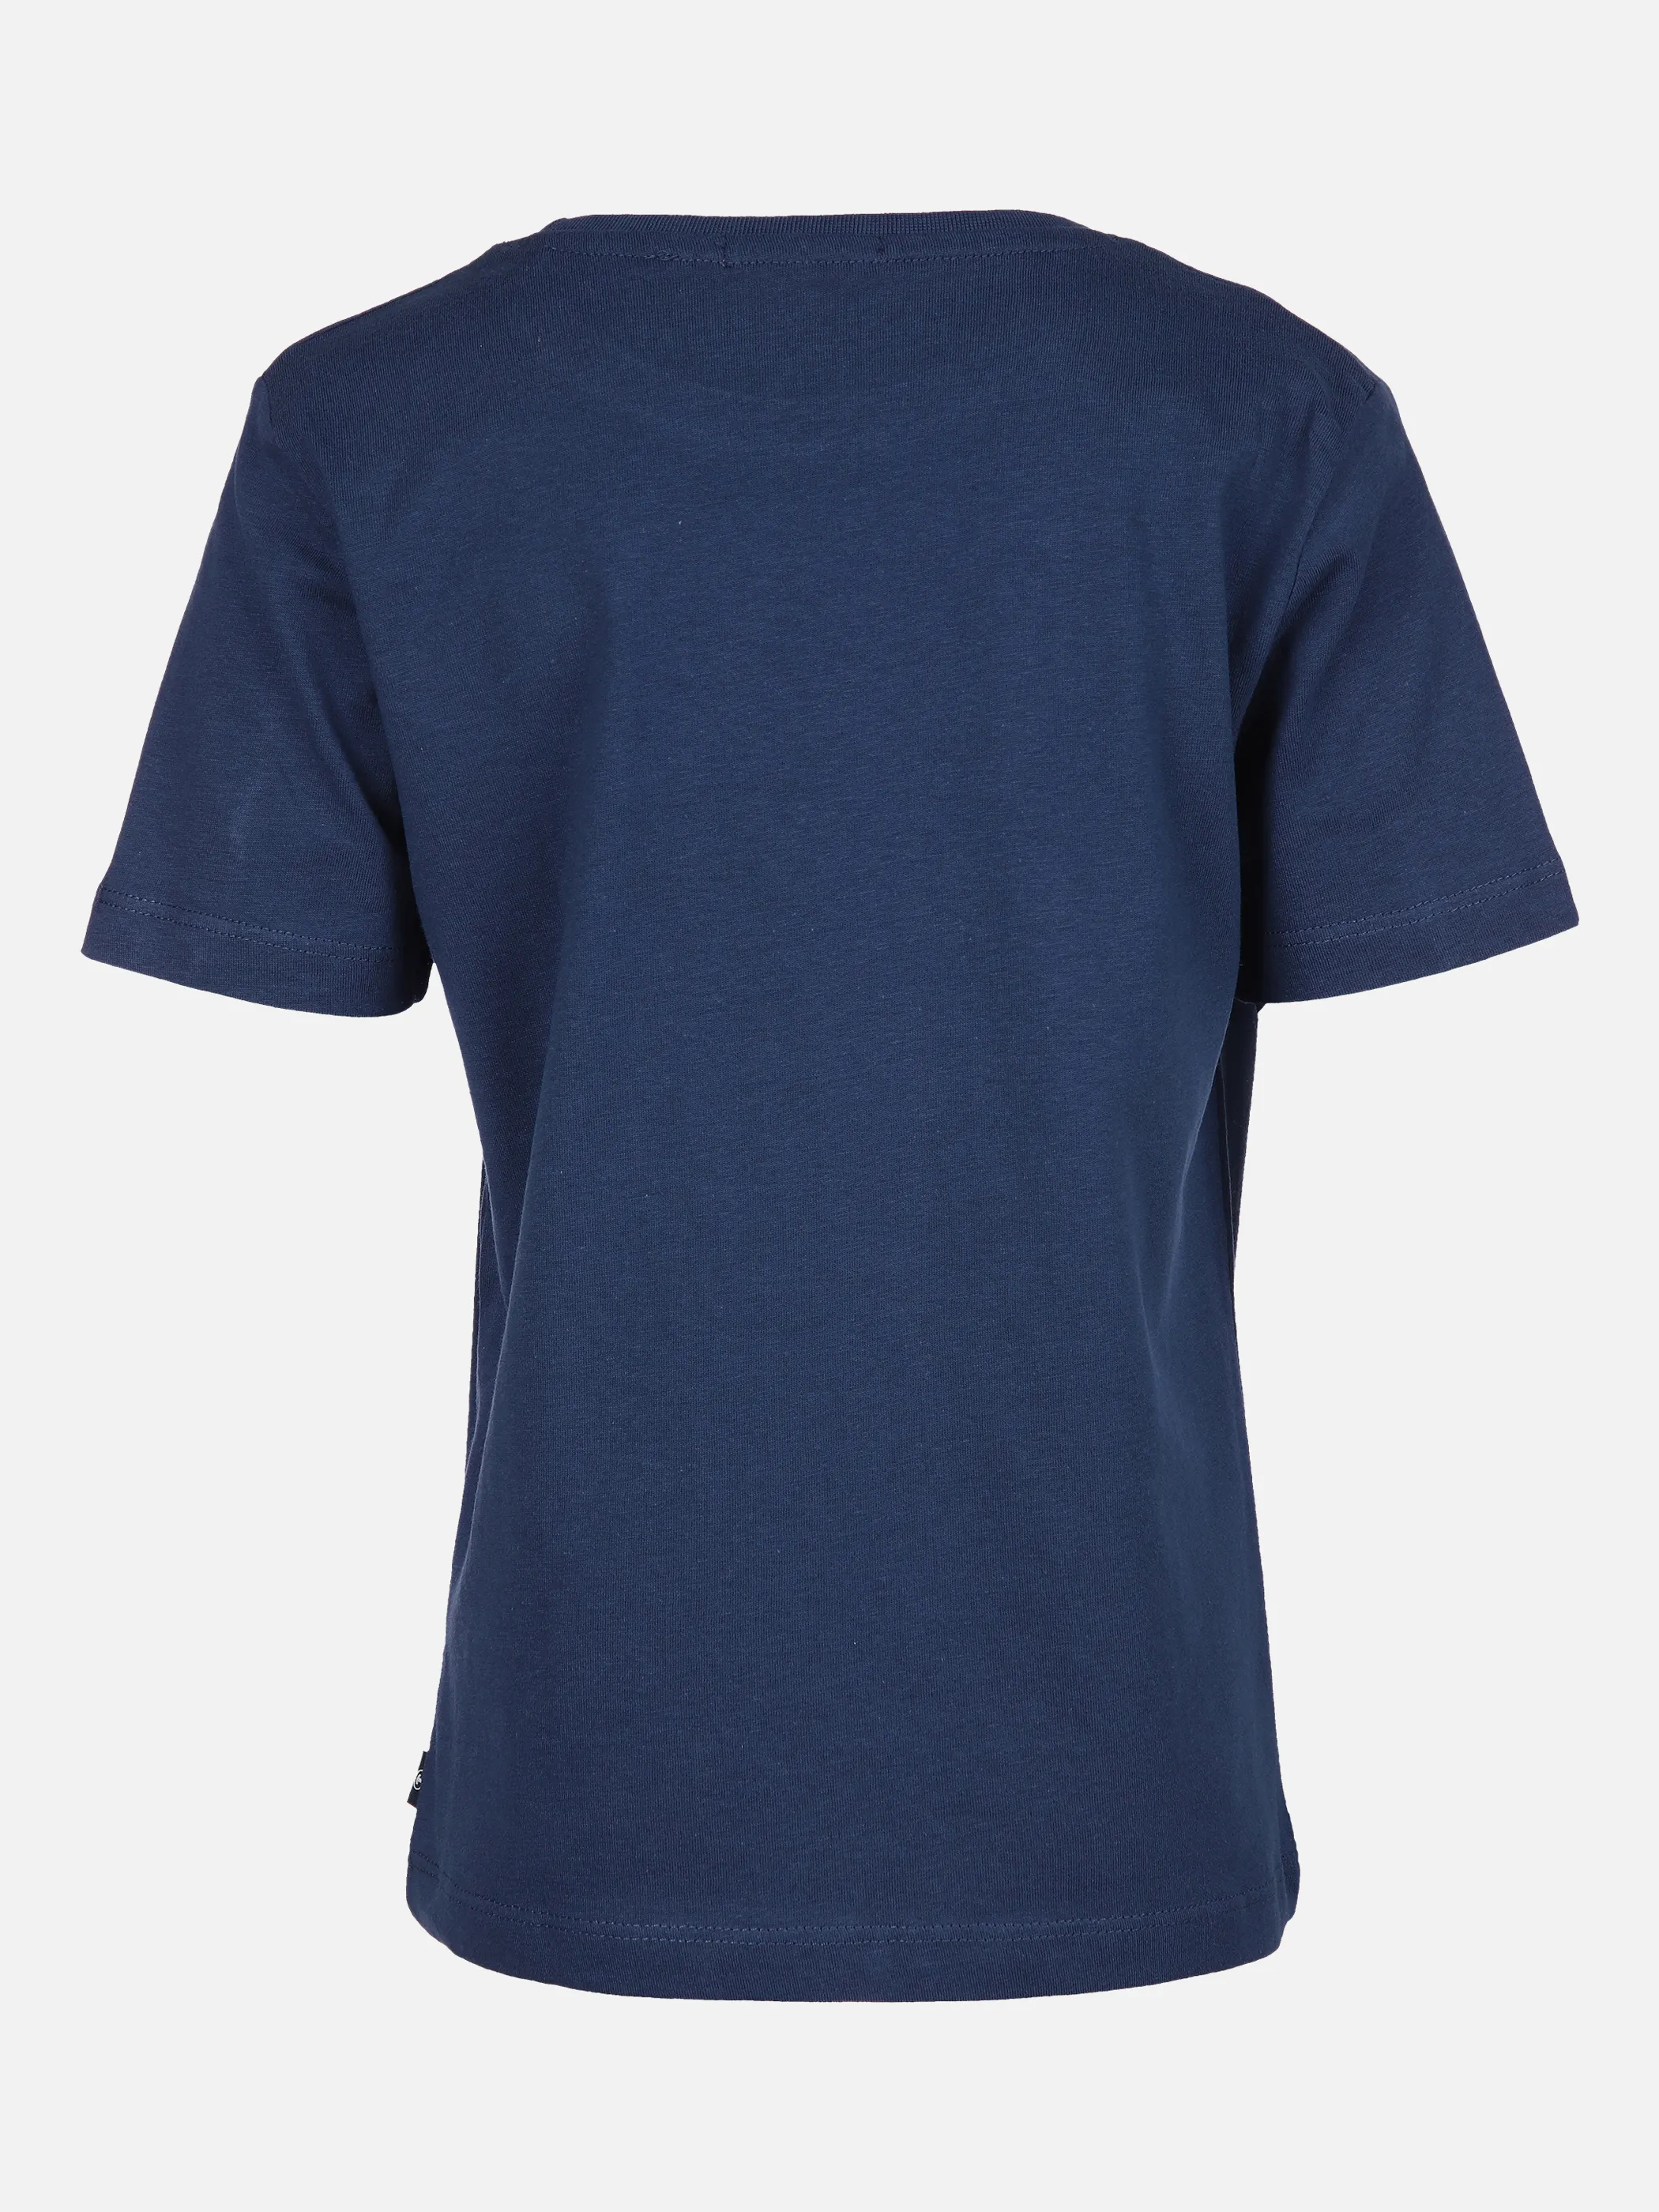 Tom Tailor 1031853 printed t-shirt Blau 865847 10378 2